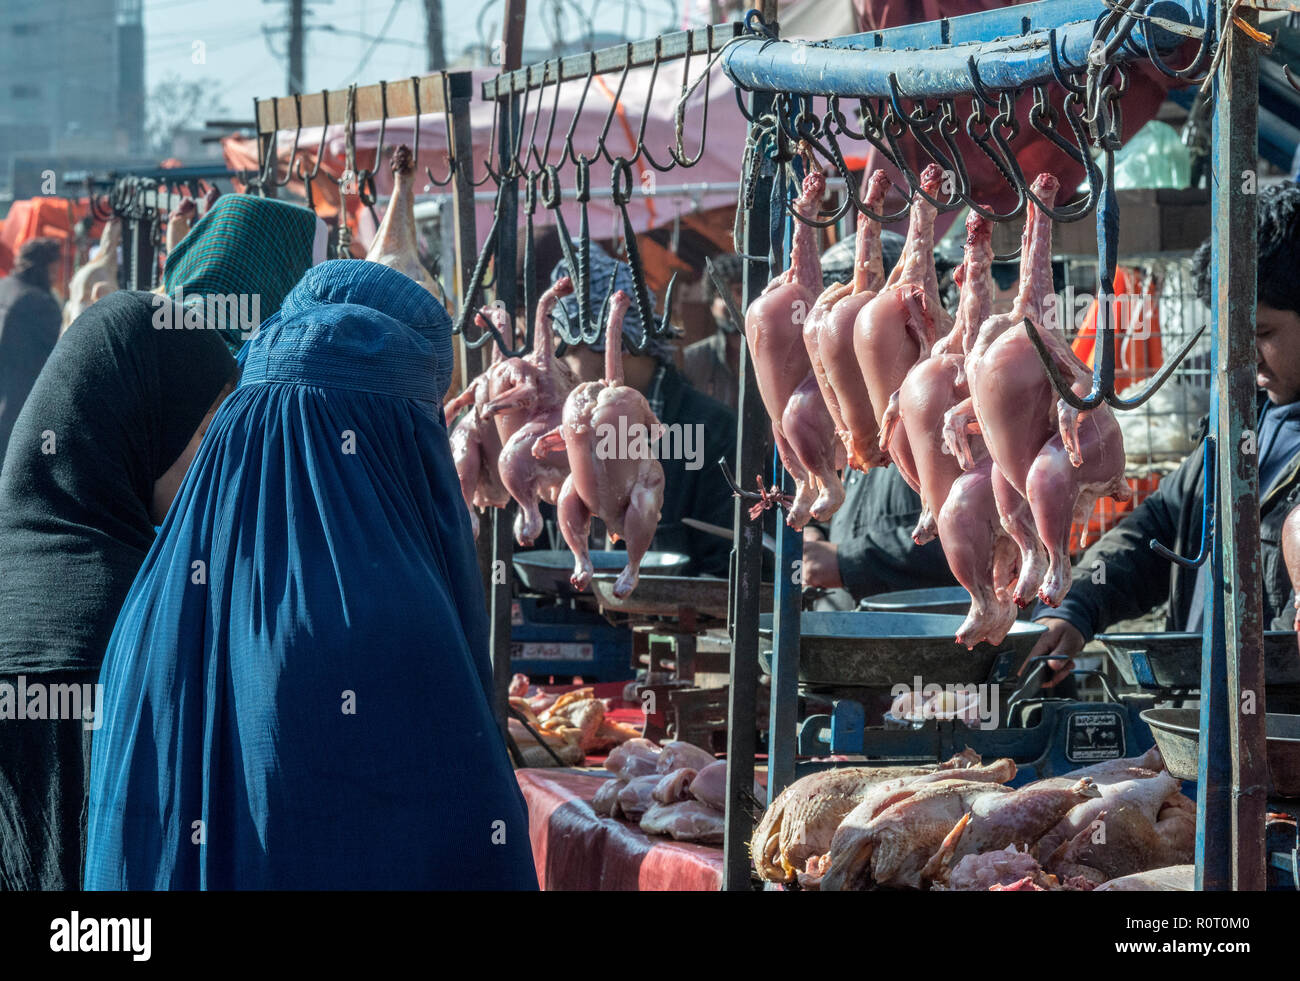 Butcher Selling Skinless Chicken To Women Wearing Blue Burqa At The Mazar-e Sharif Central Bazaar, Maraz-e Sharif, Balkh Province, Afghanistan Stock Photo